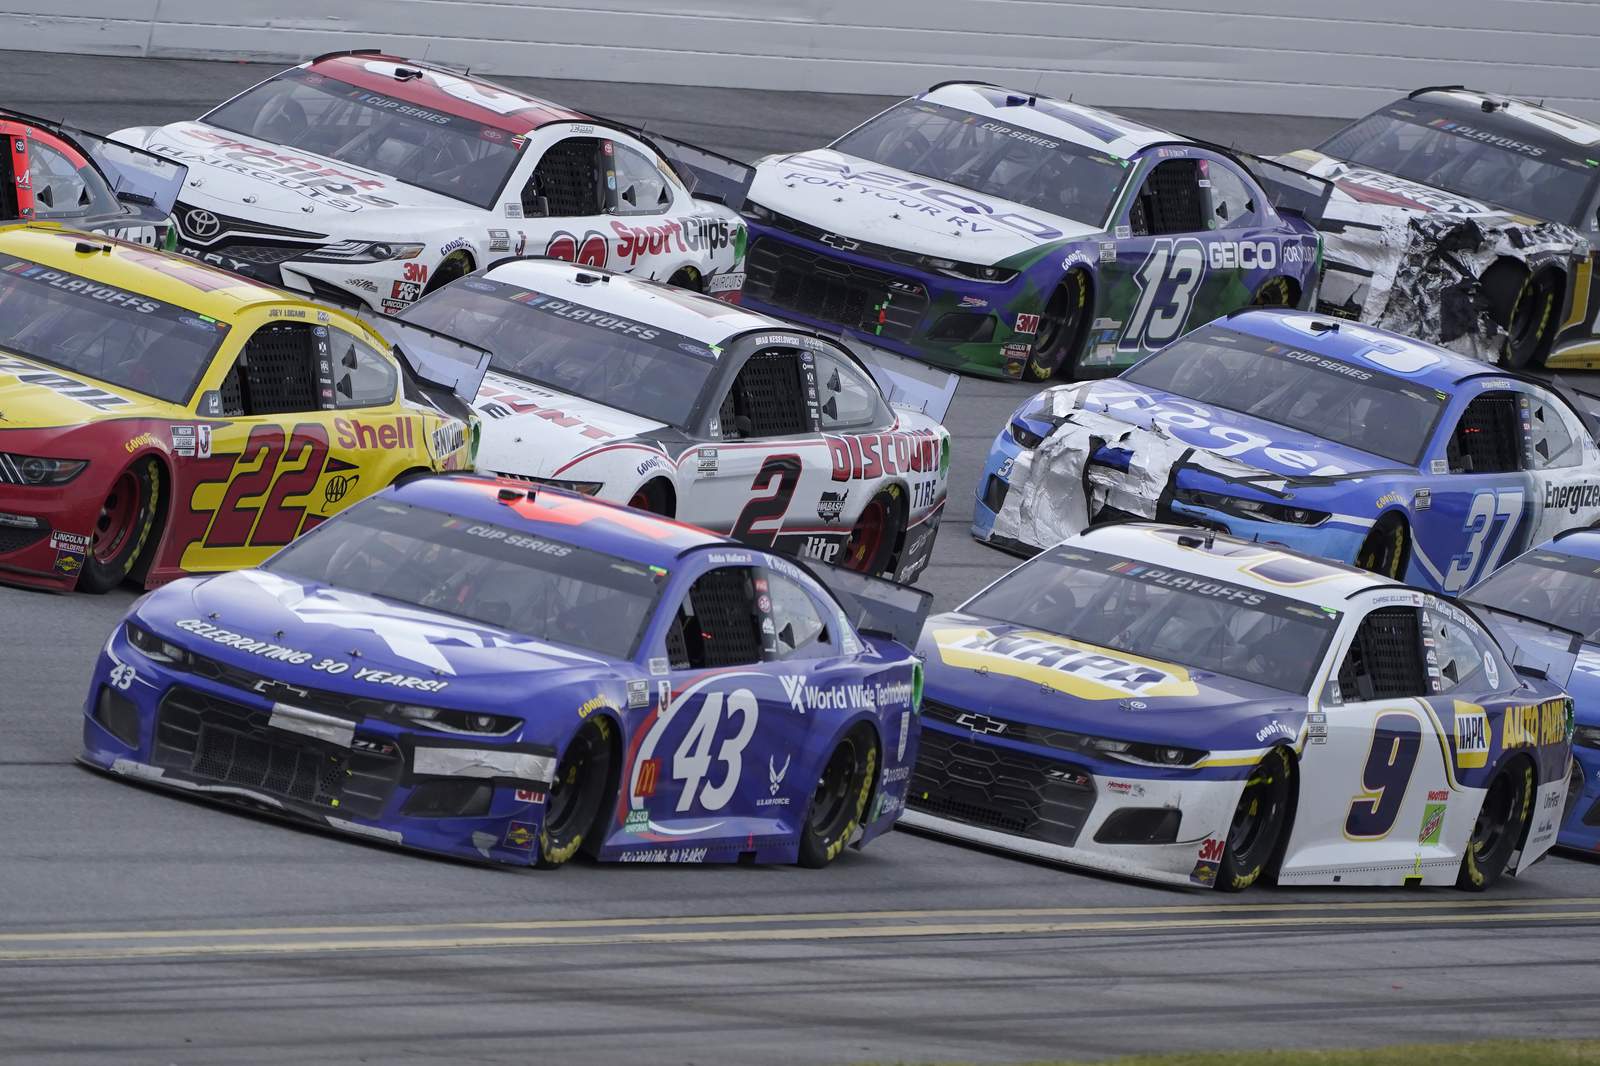 NASCAR's upcoming economic model spurs interest in new teams